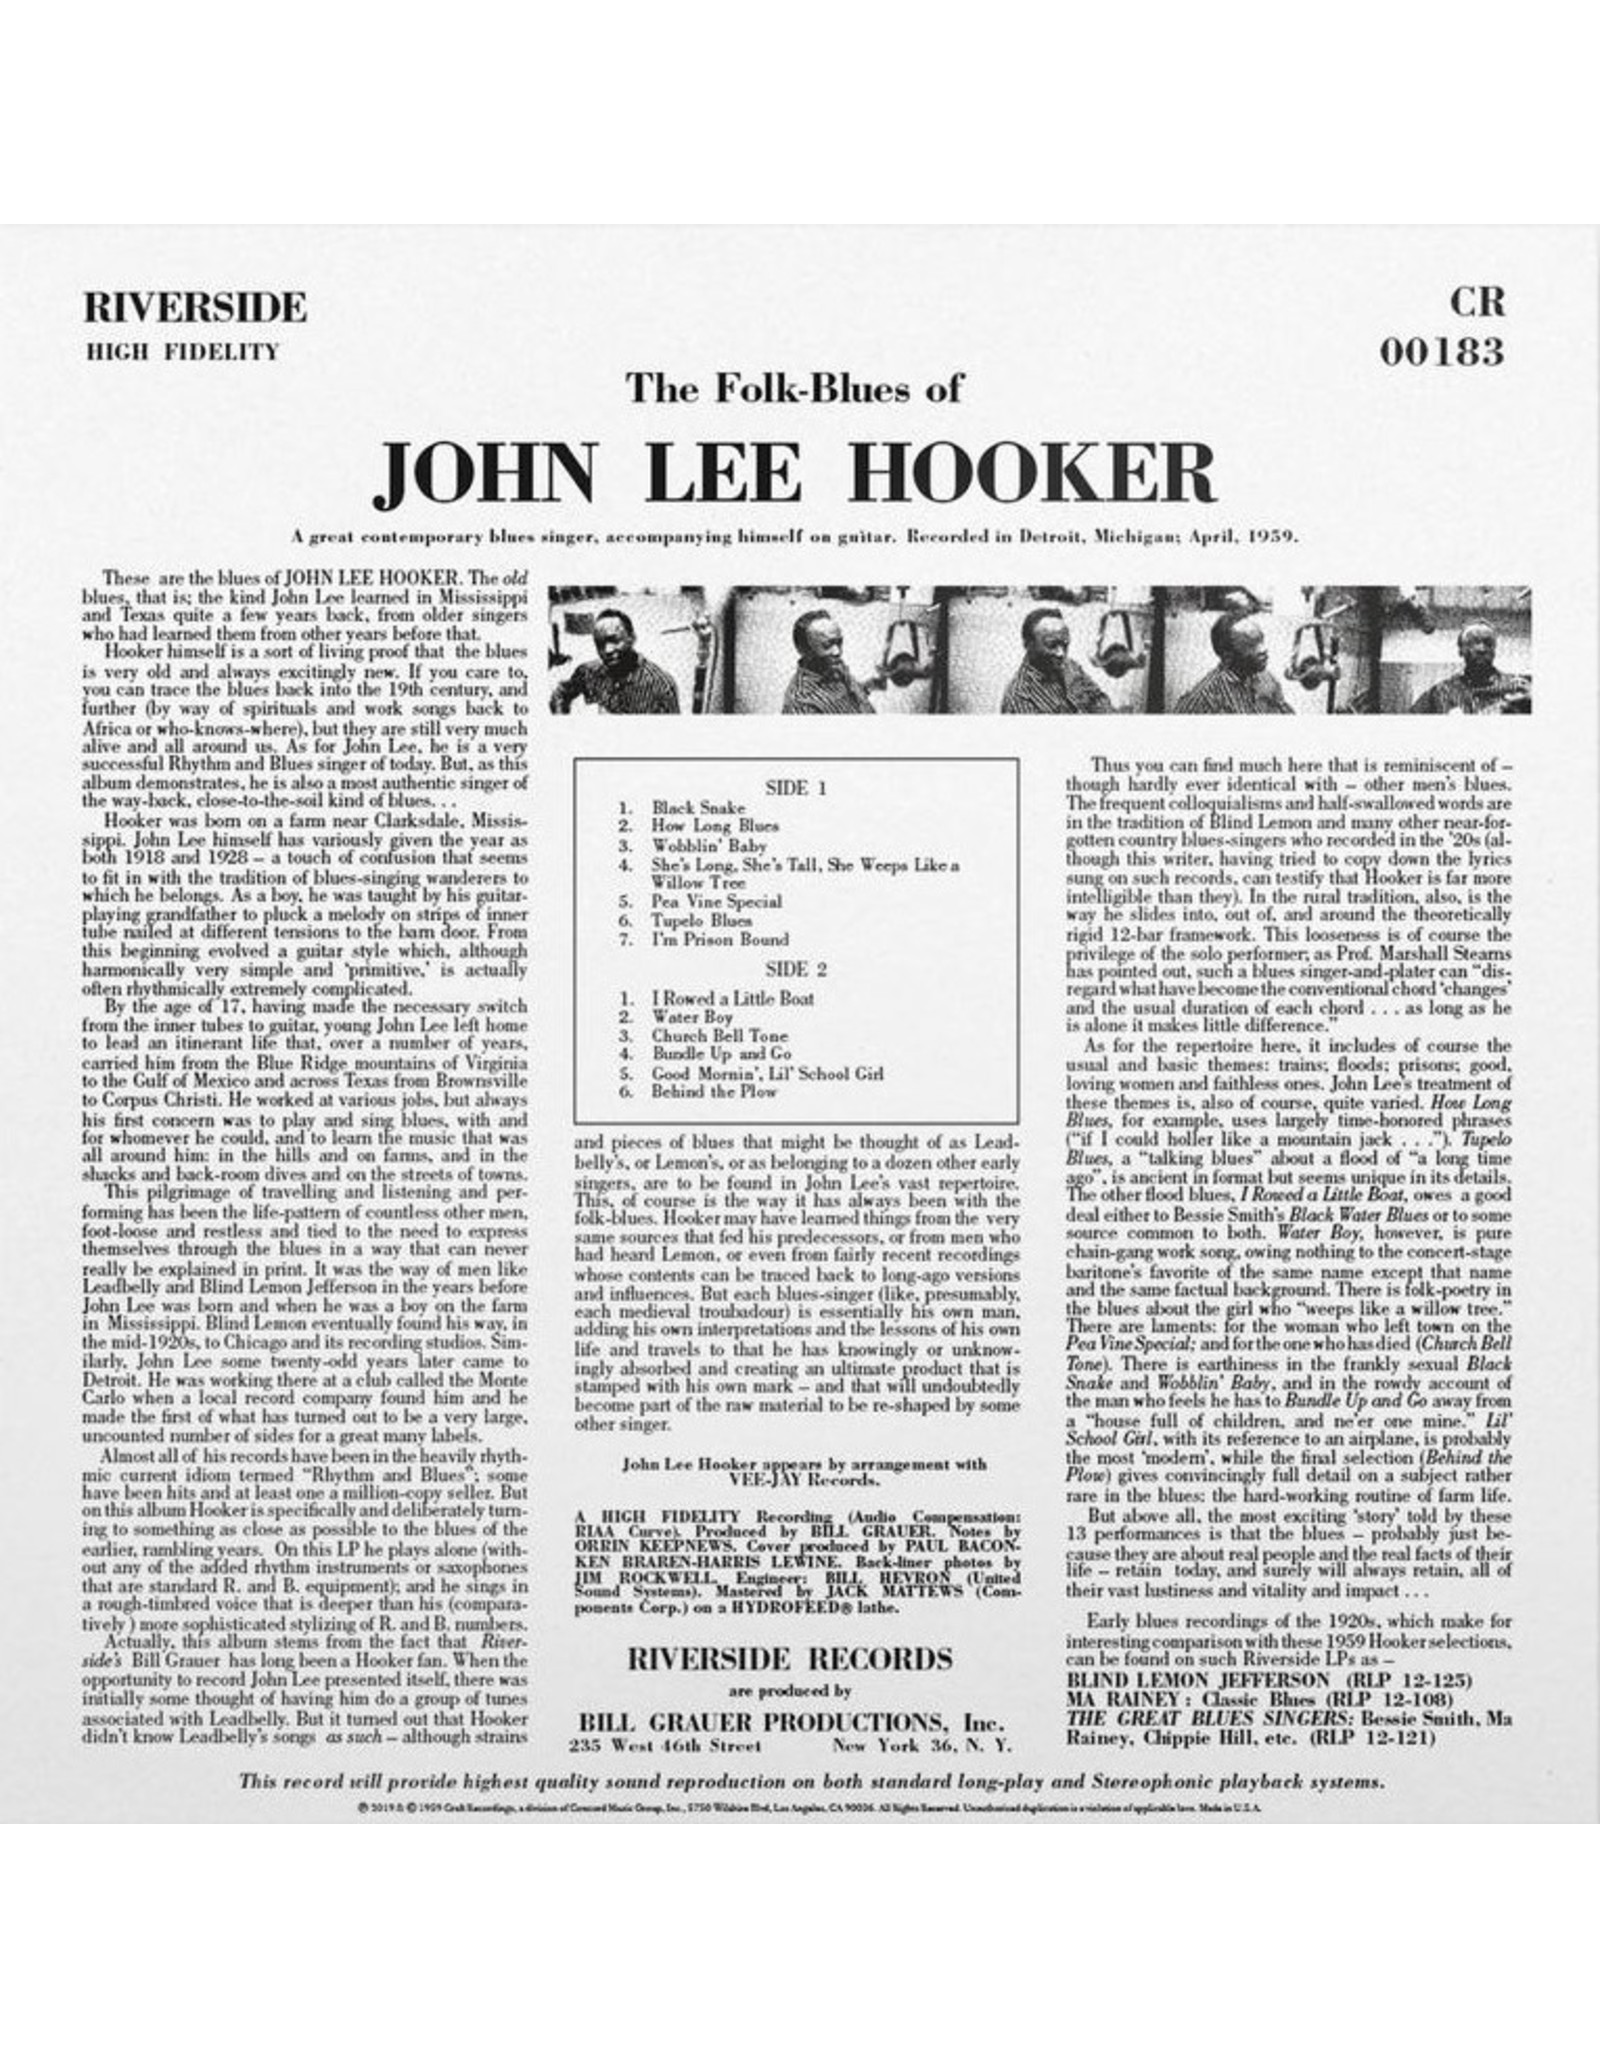 John Lee Hooker - The Country Blues of John Lee Hooker (2019 Remaster)